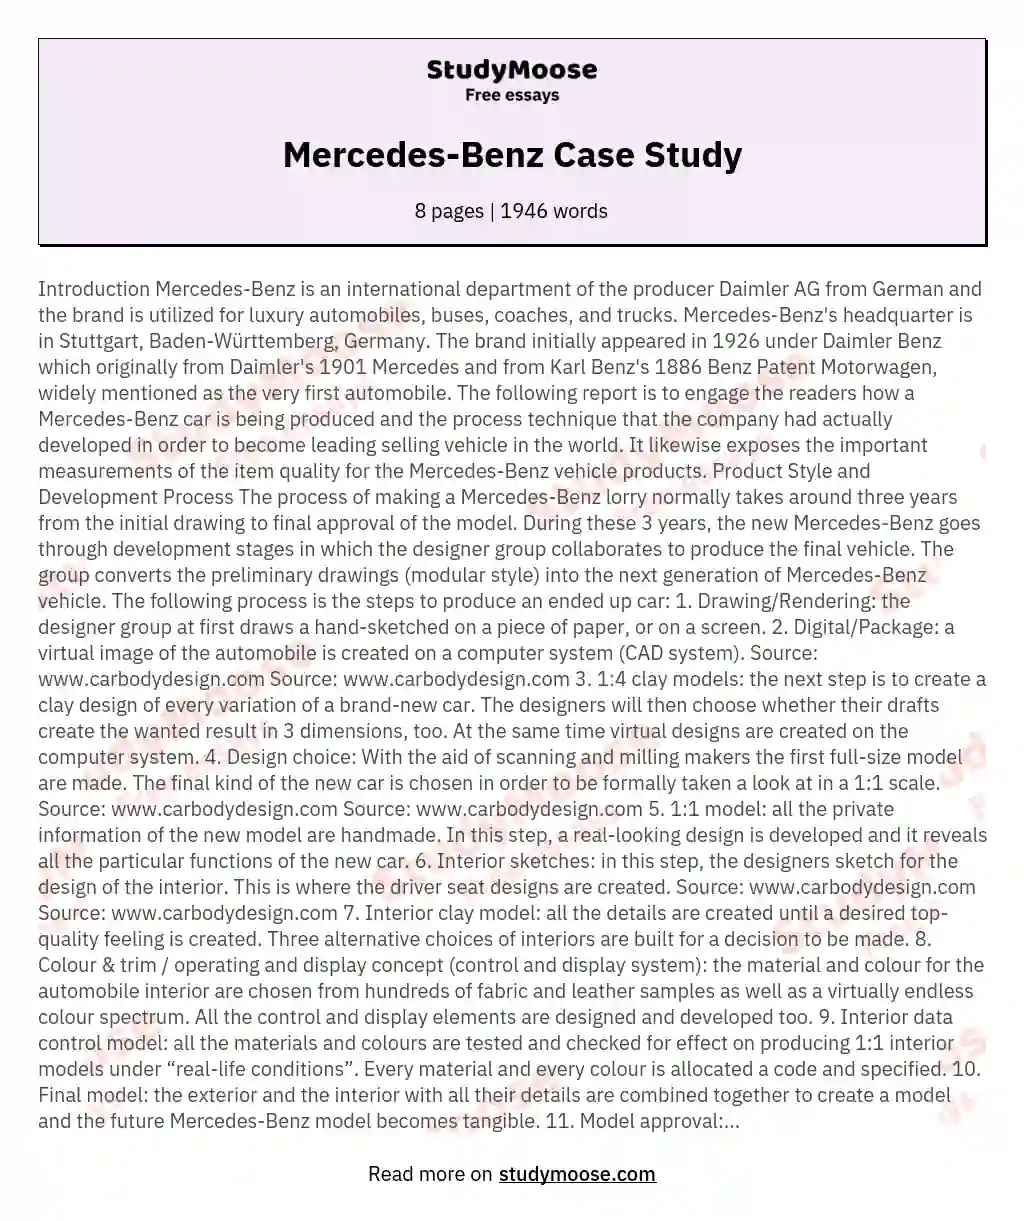 Mercedes-Benz Case Study essay